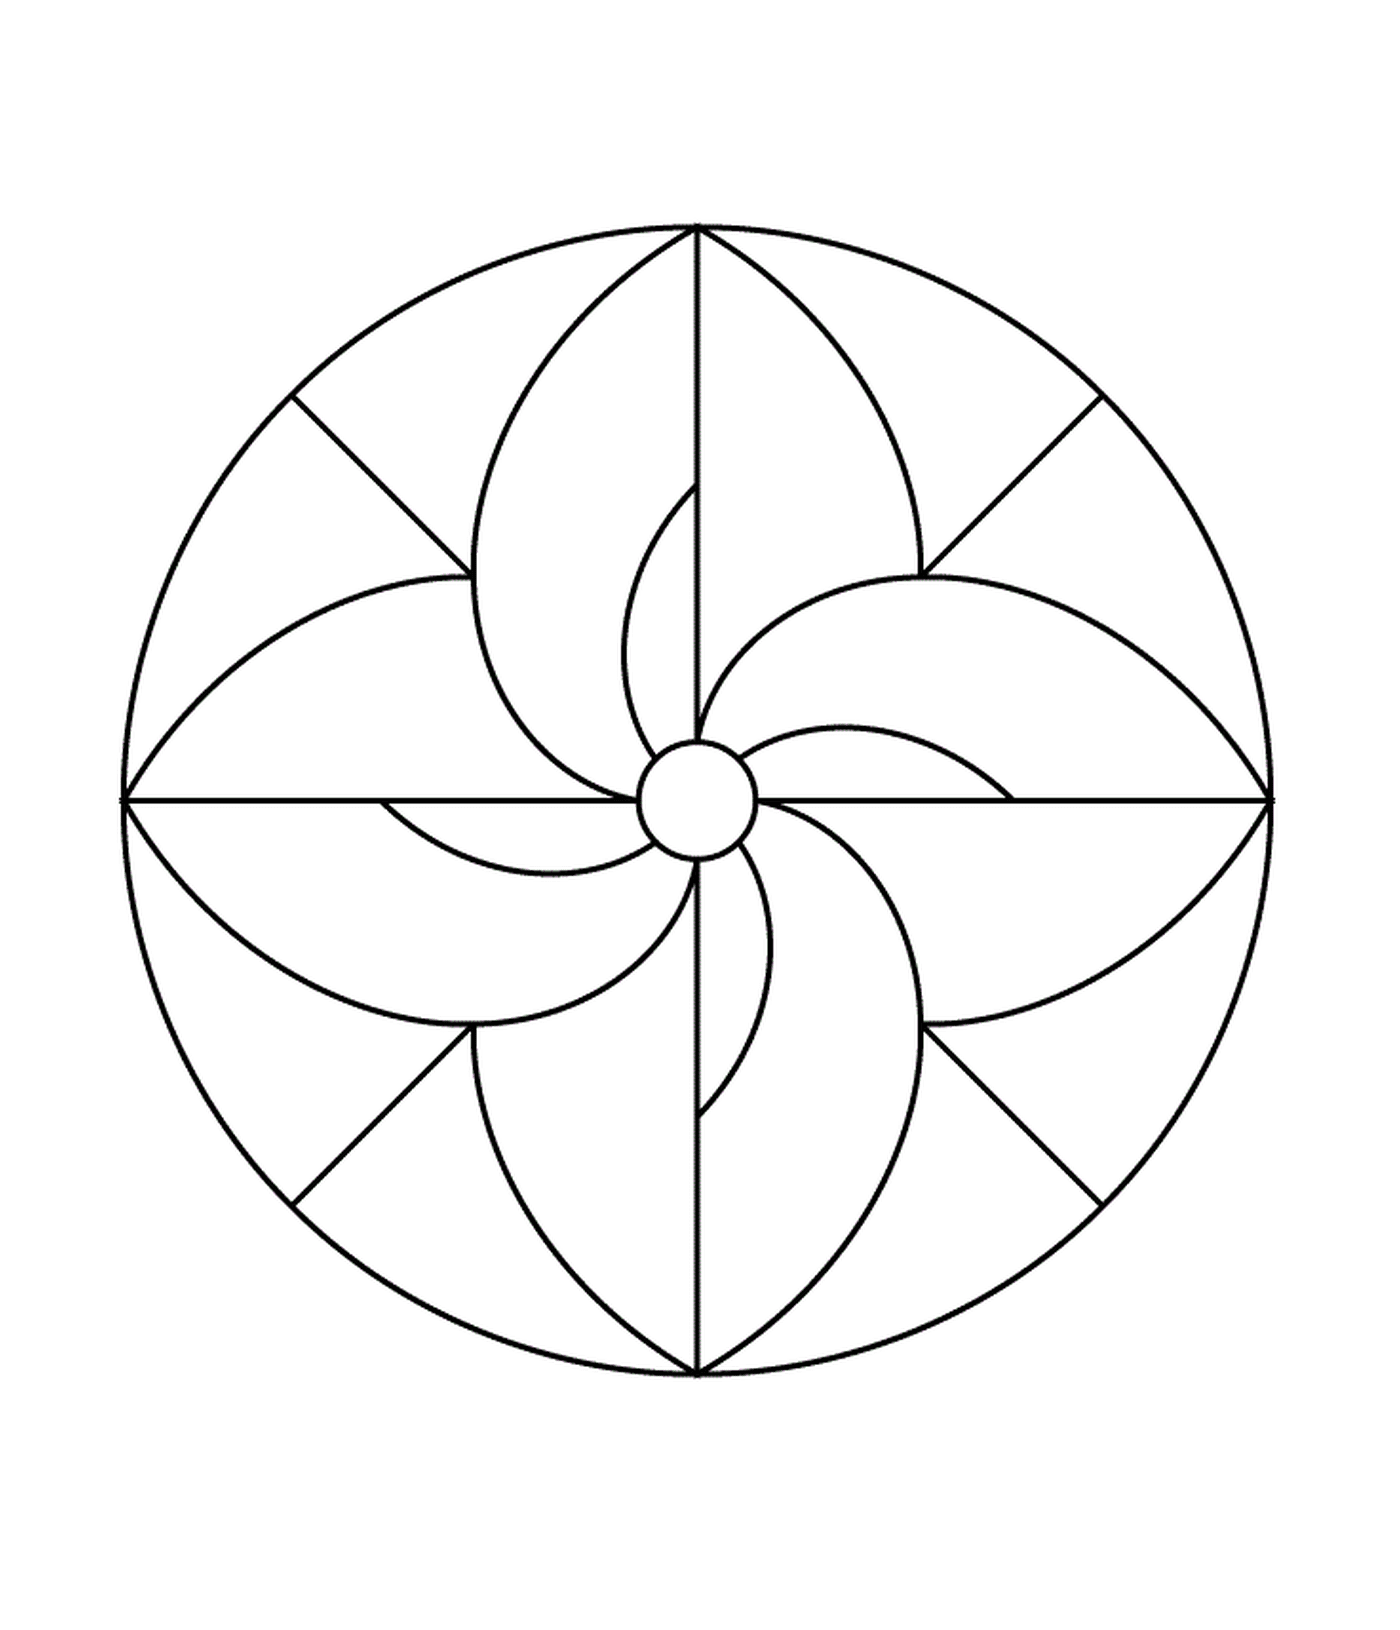  A circular pattern 